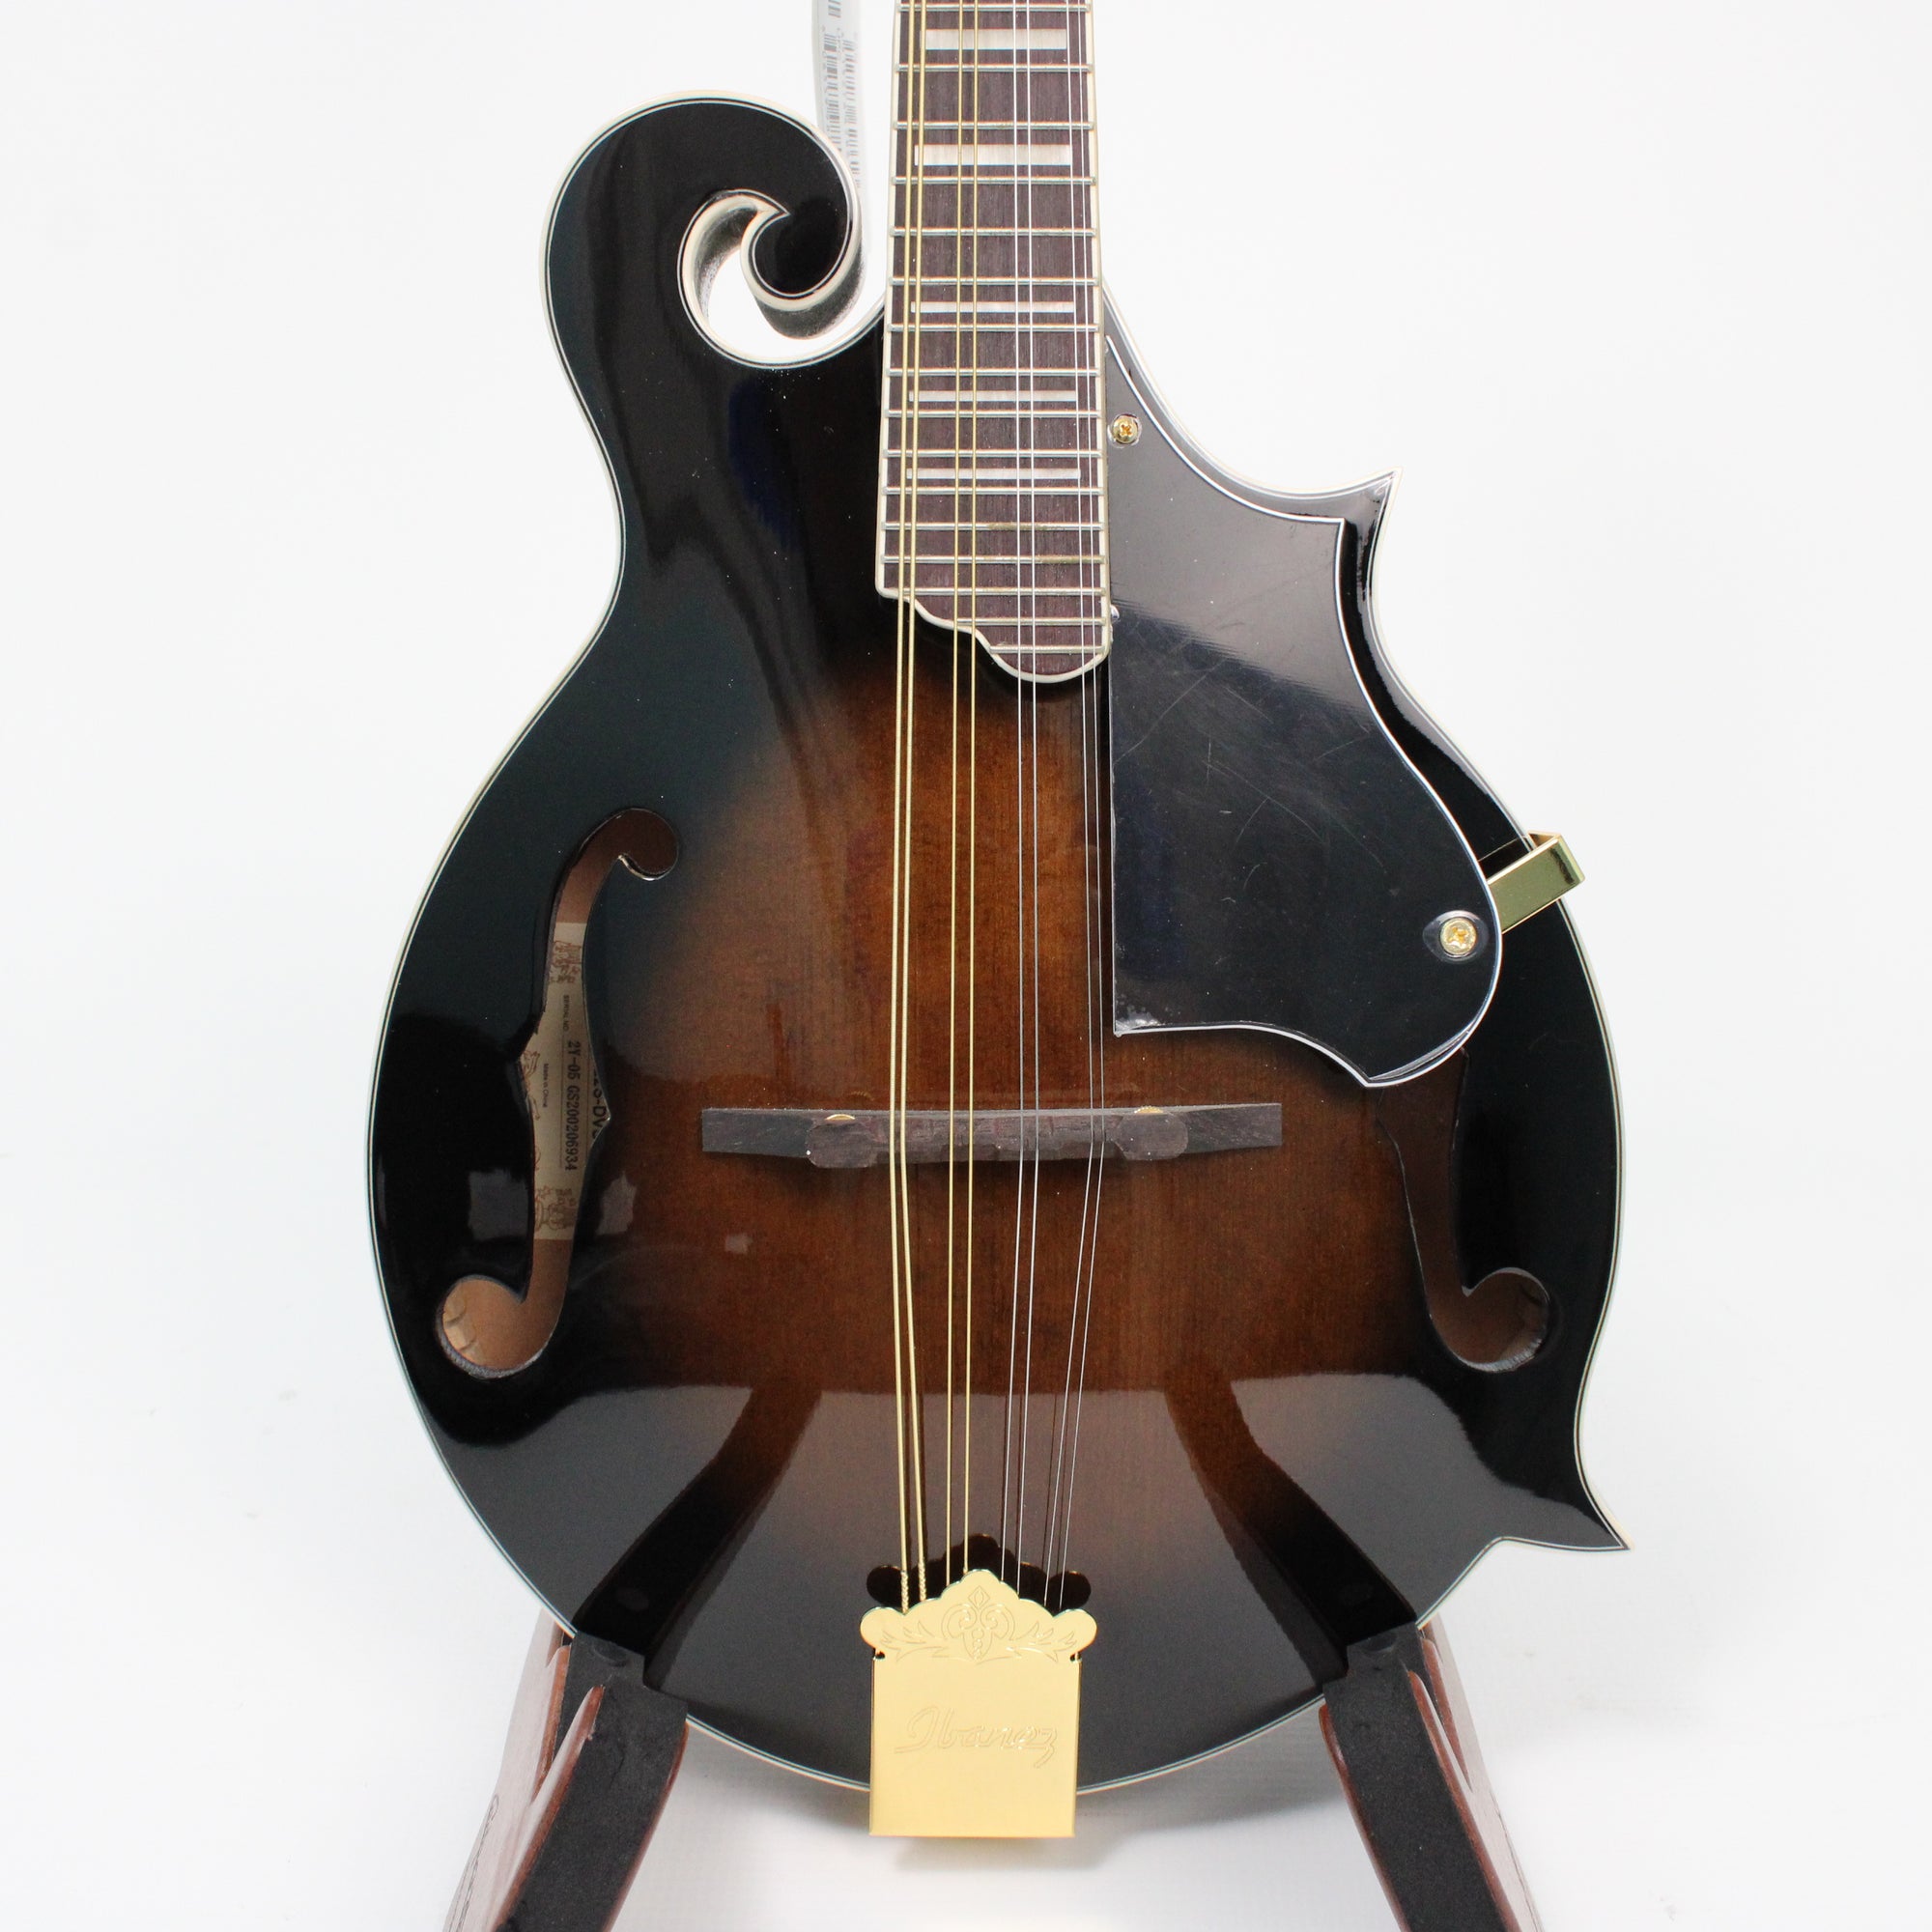 Ibanez M522SDVS F-Style Mandolin - Dark Violin Sunburst